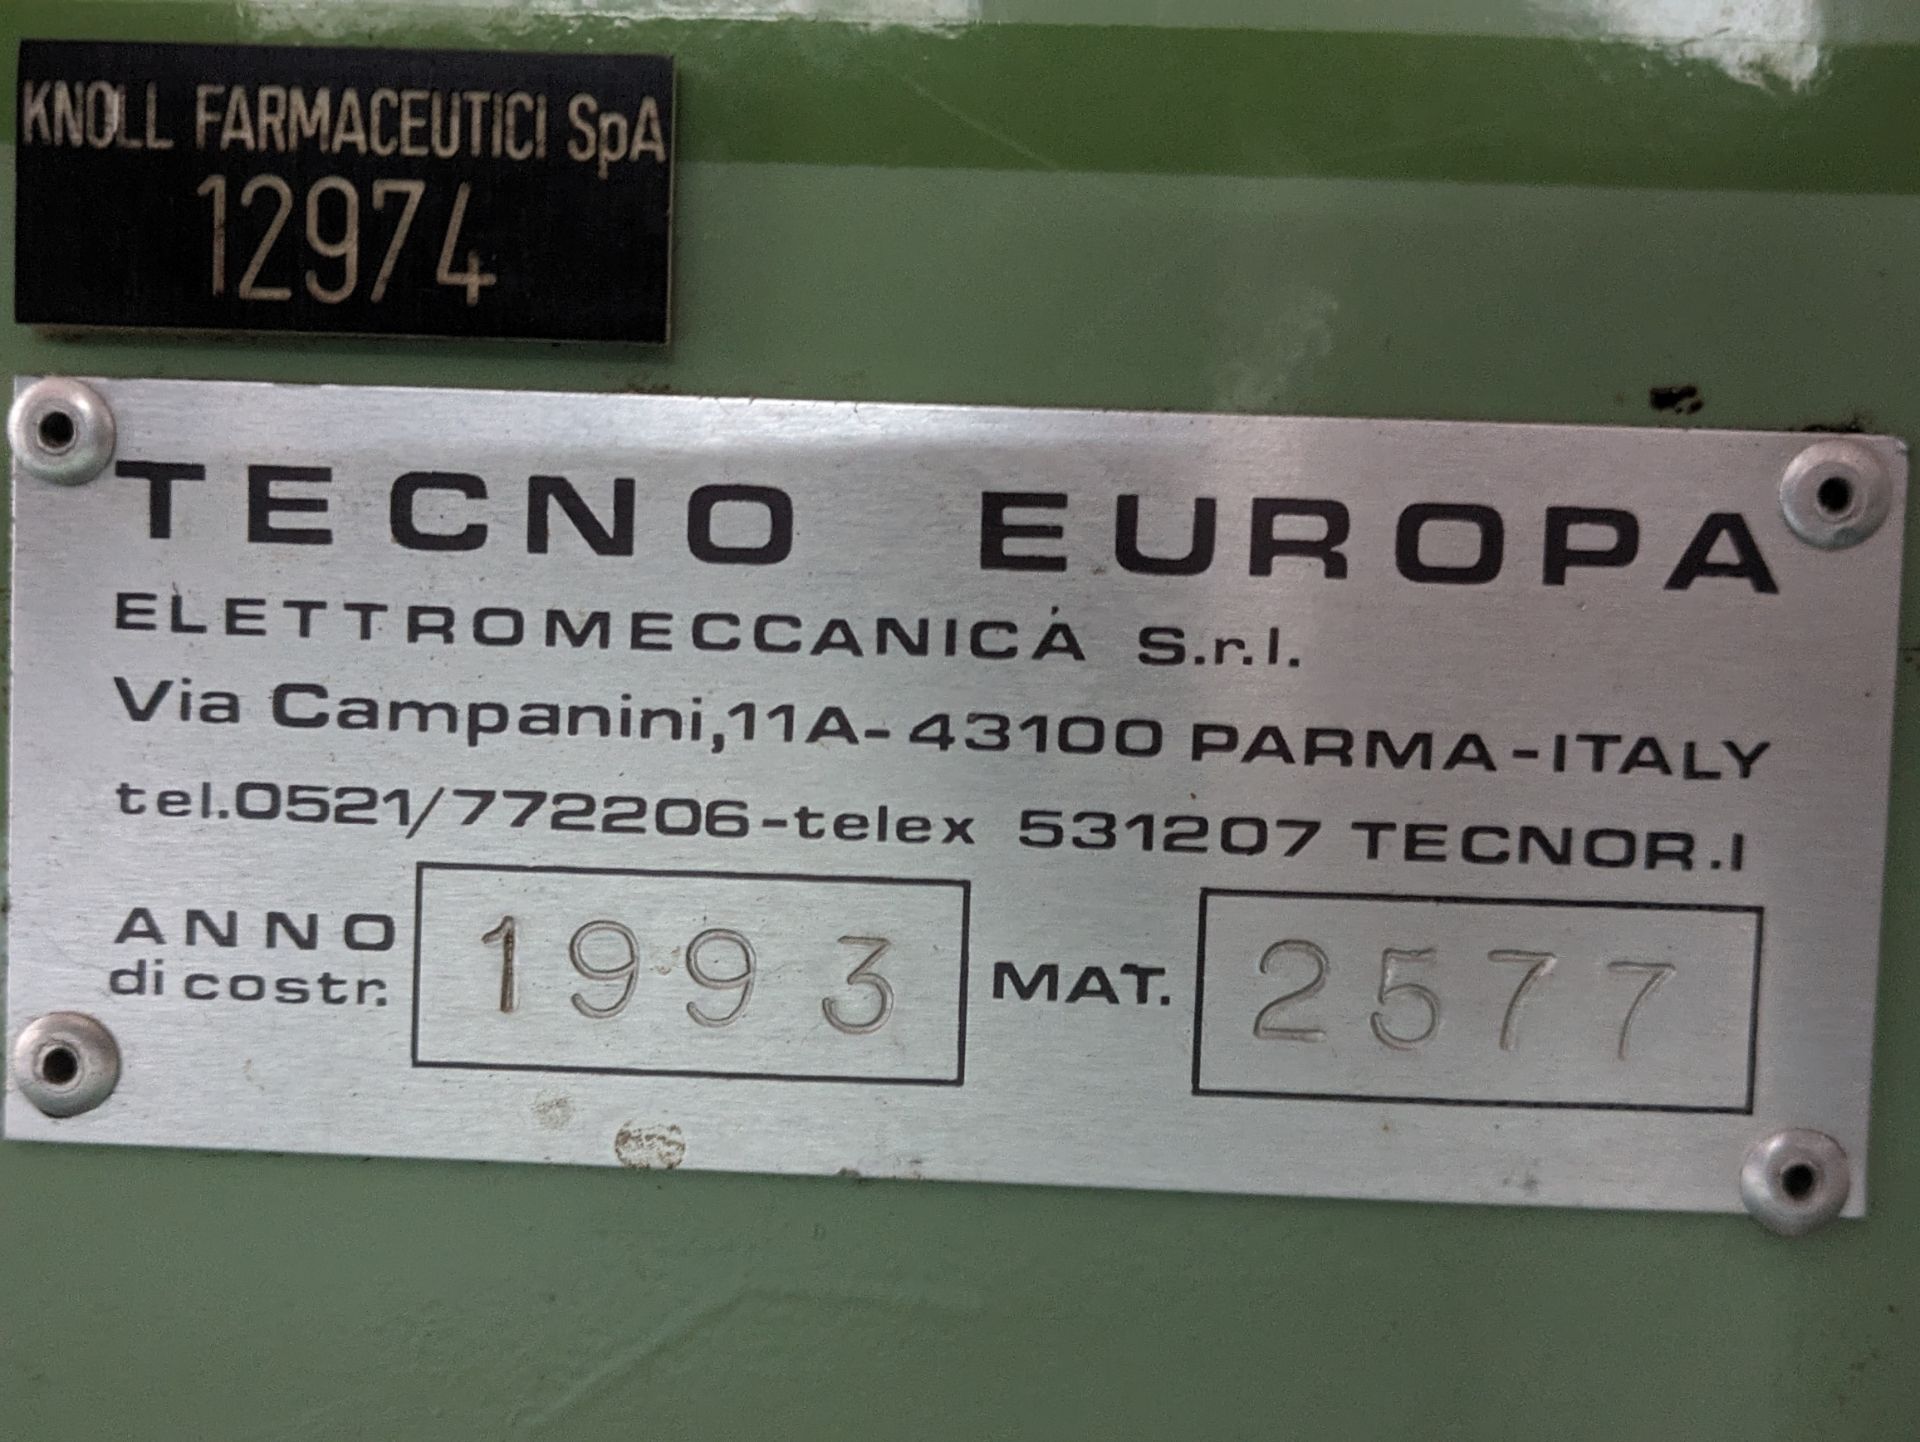 Tecno Europa 1993 Checkweigher - Image 4 of 4